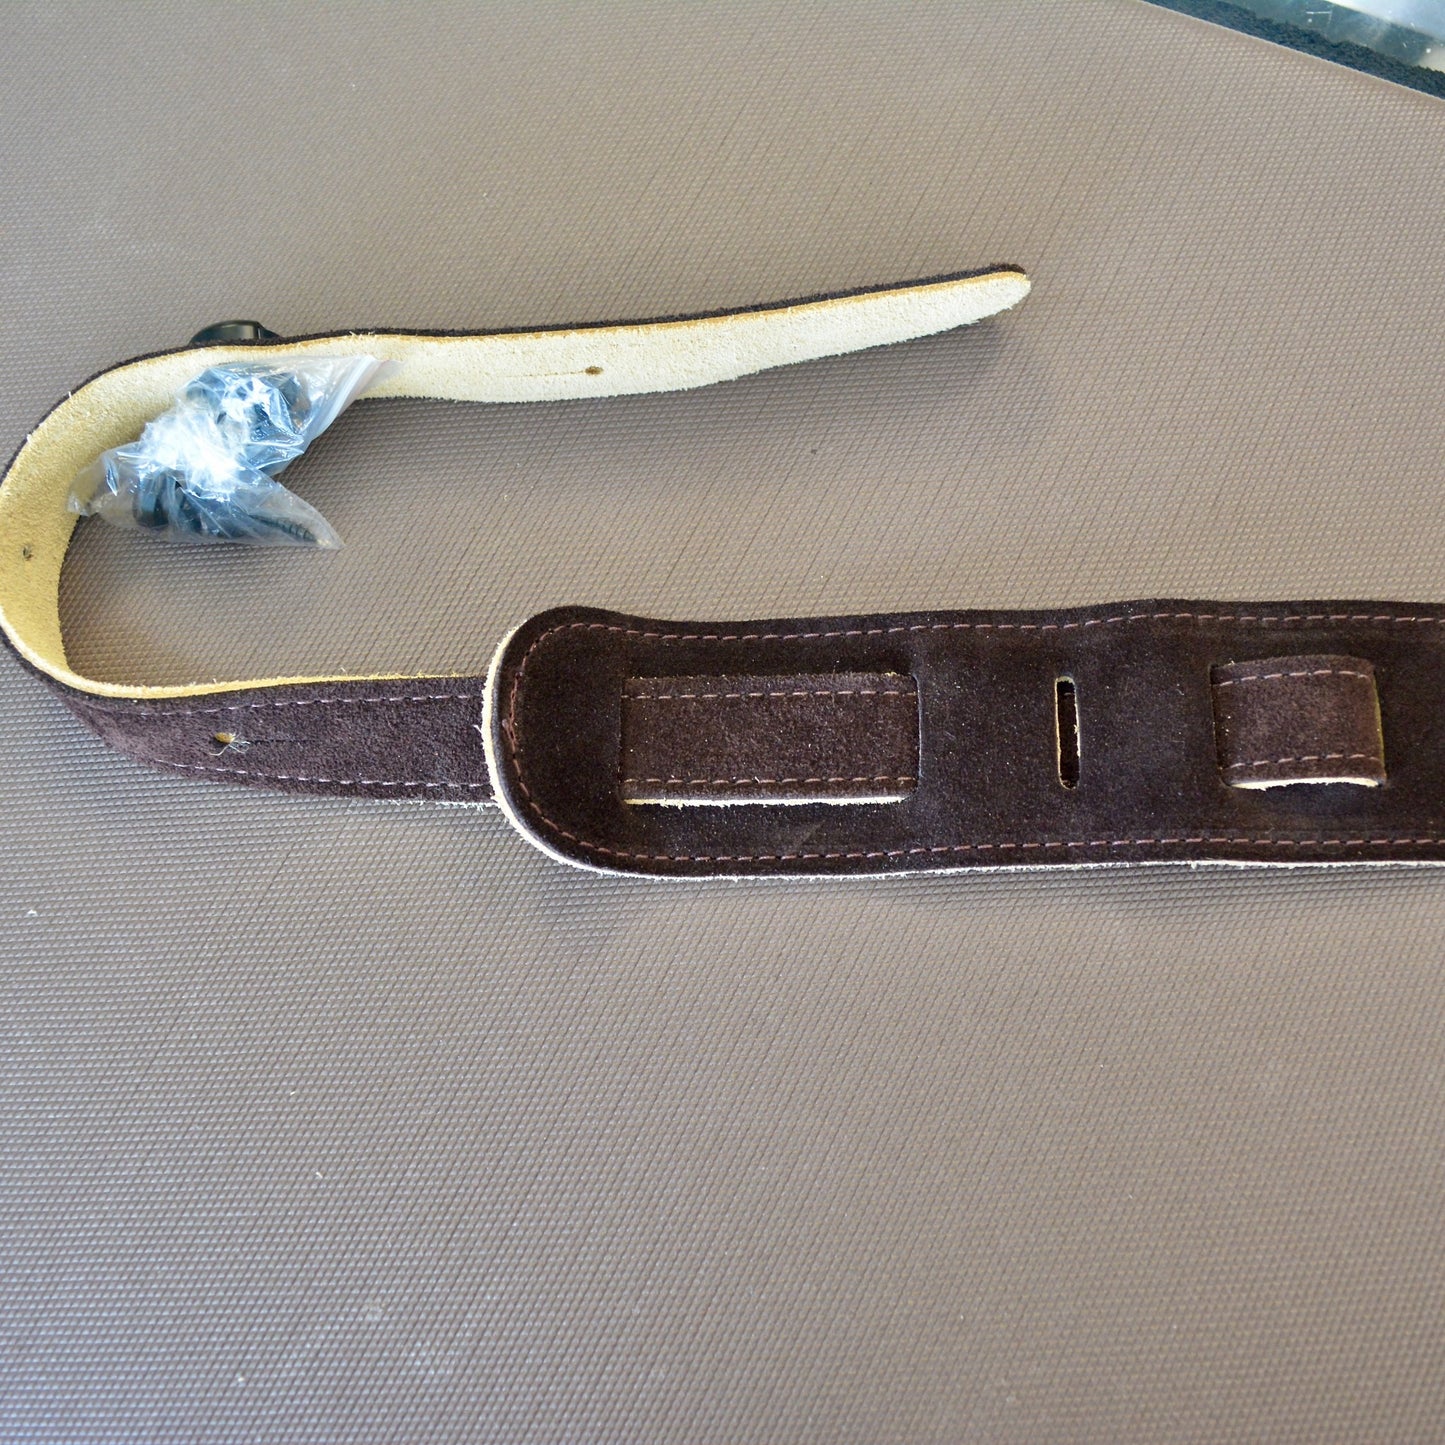 Fender USED Suede Leather Strap w/ Strap Locks